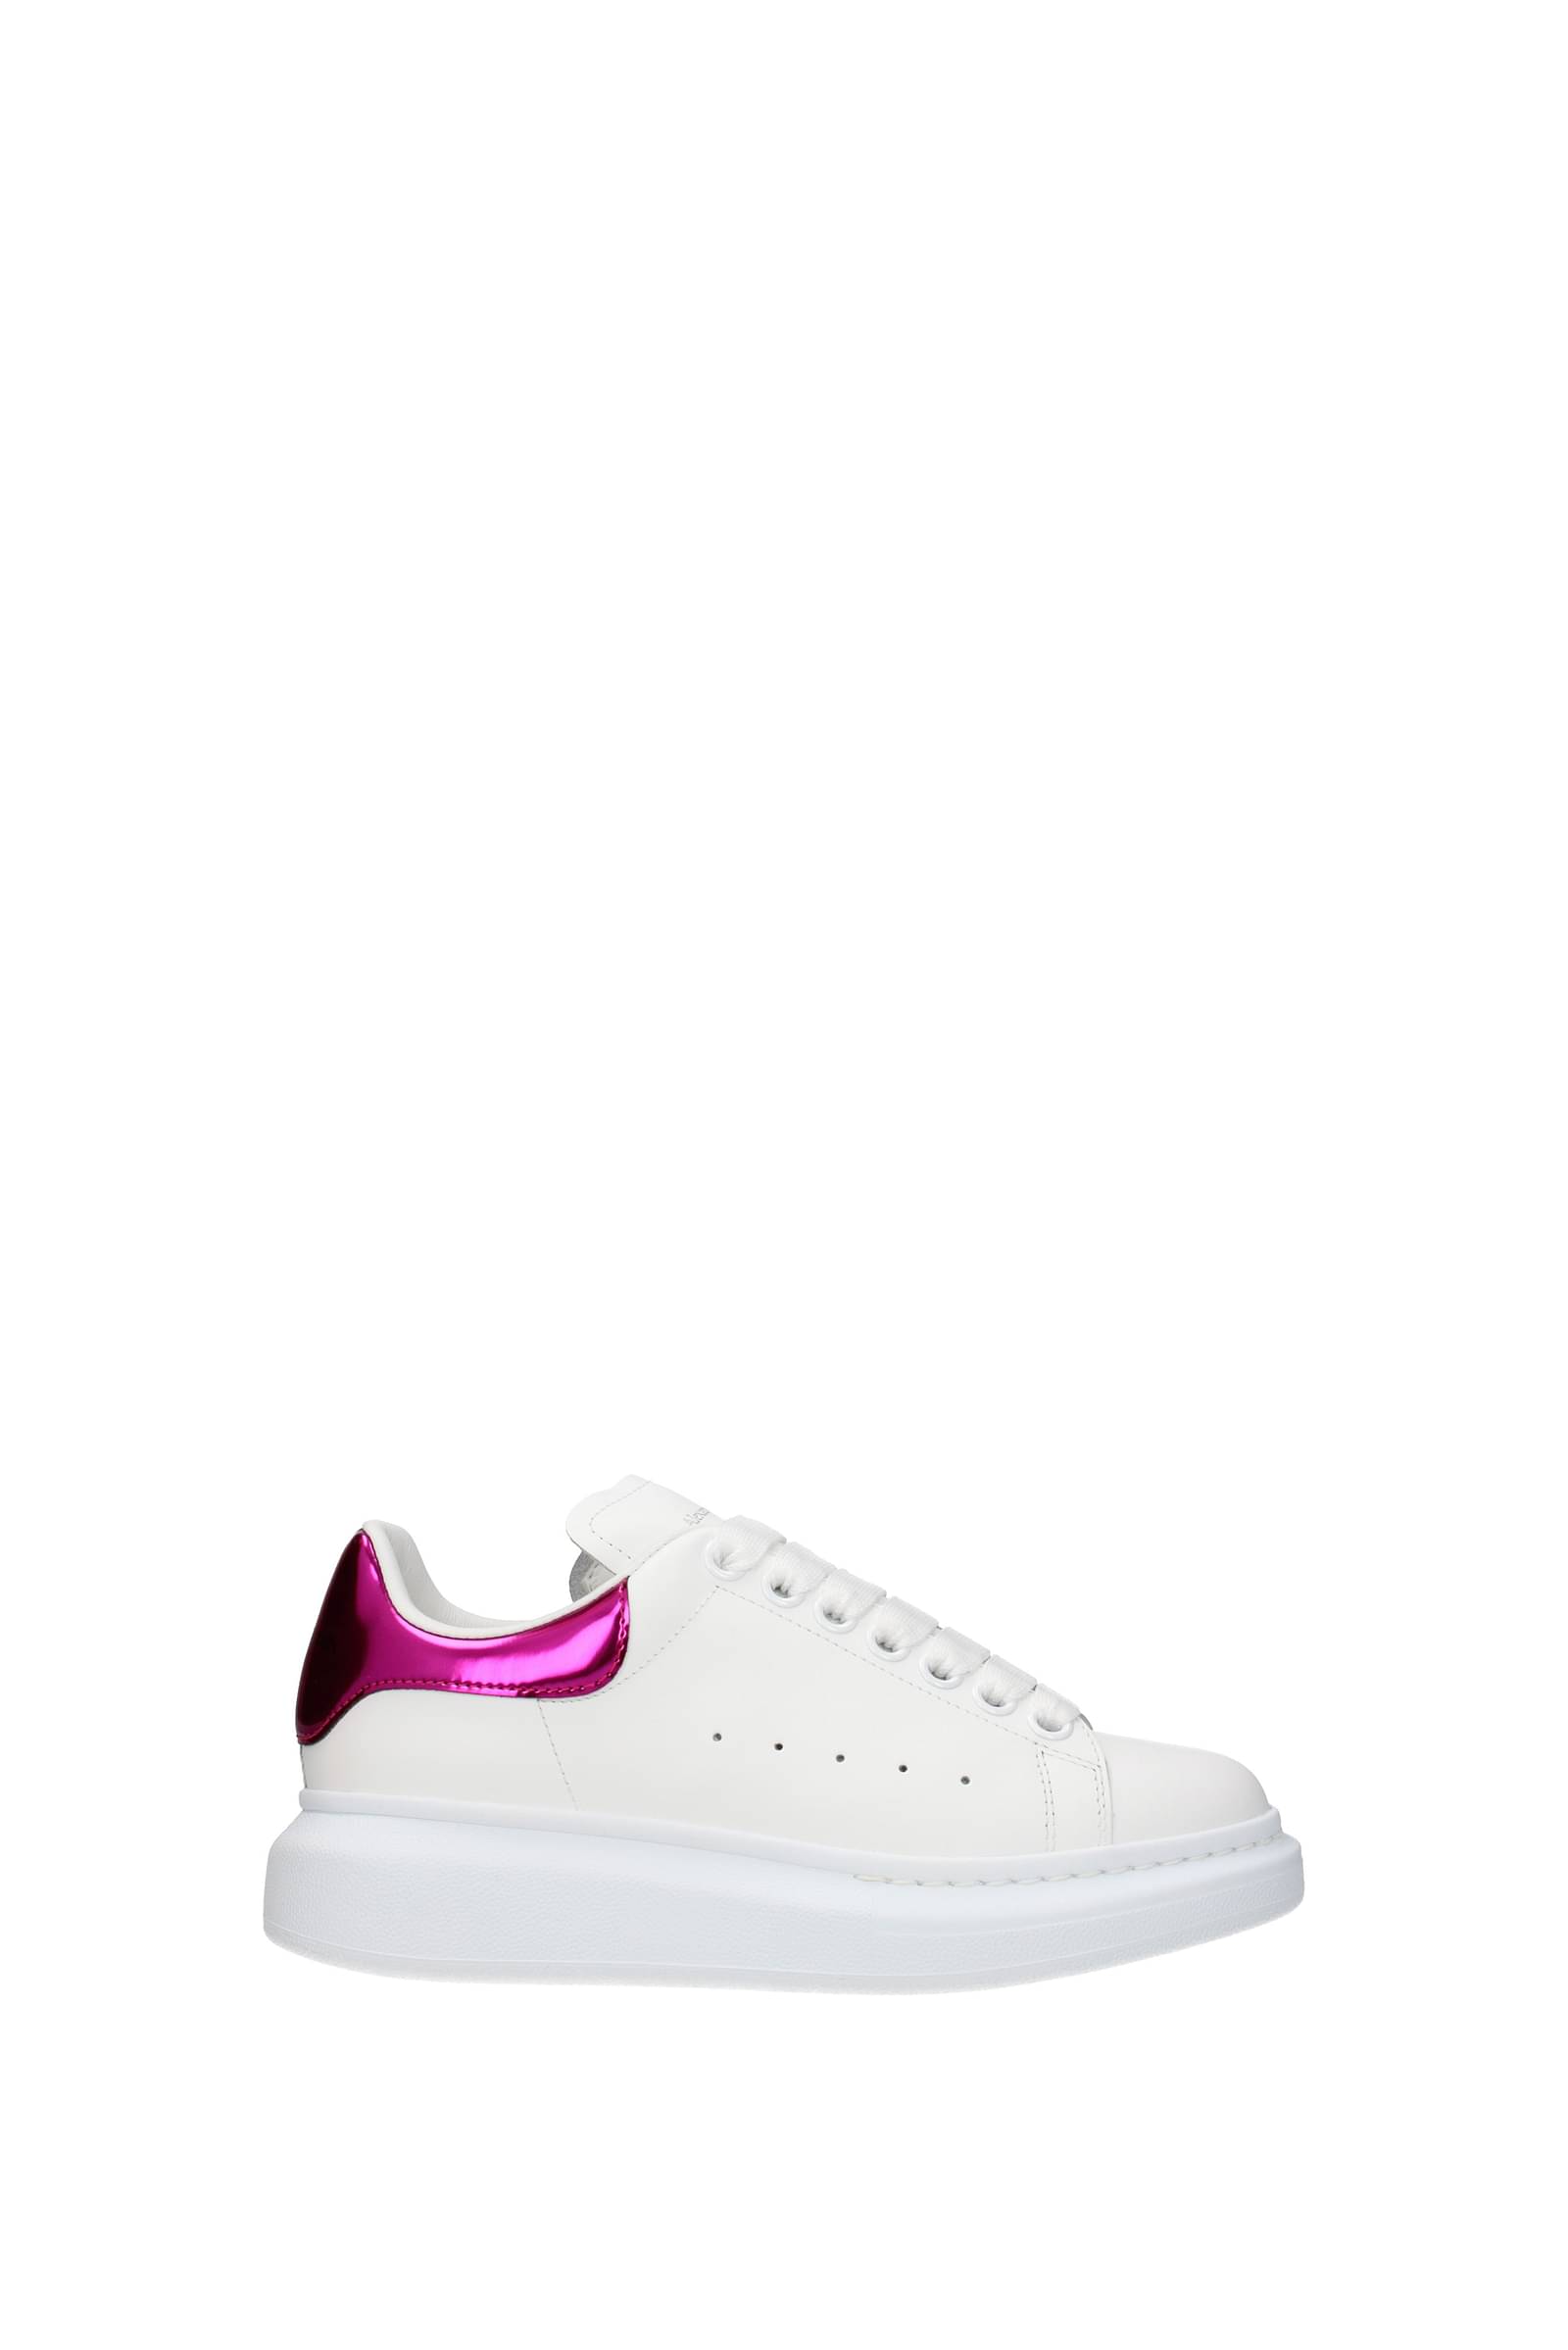 Buy Alexander McQueen Wmns Oversized Sneaker 'White Hot Pink' - 553770  WHGP7 9363 | GOAT